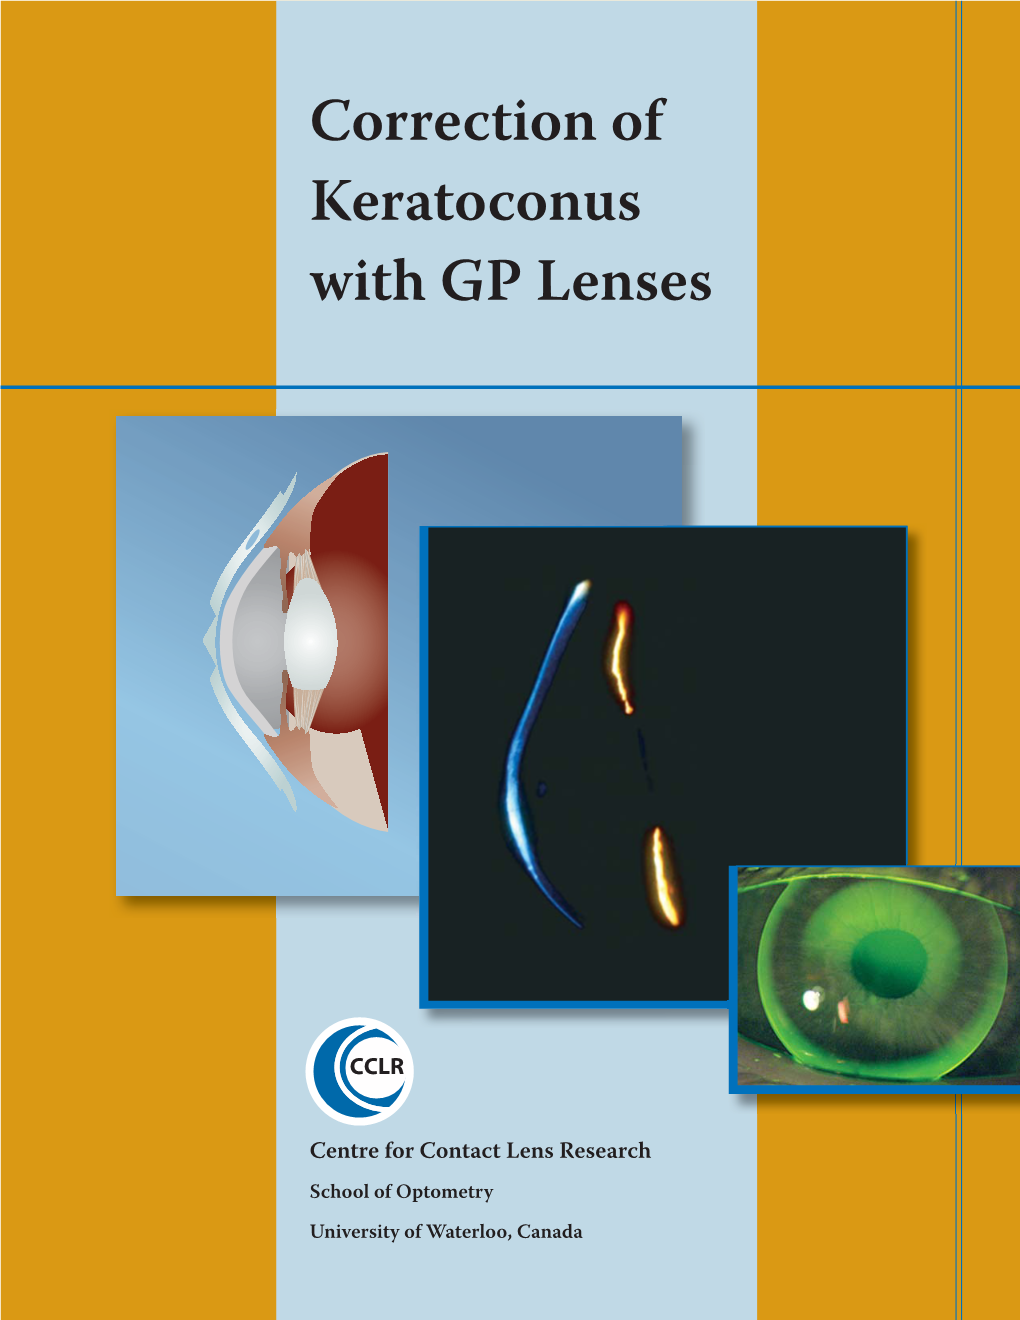 Correction of Keratoconus with GP Lenses